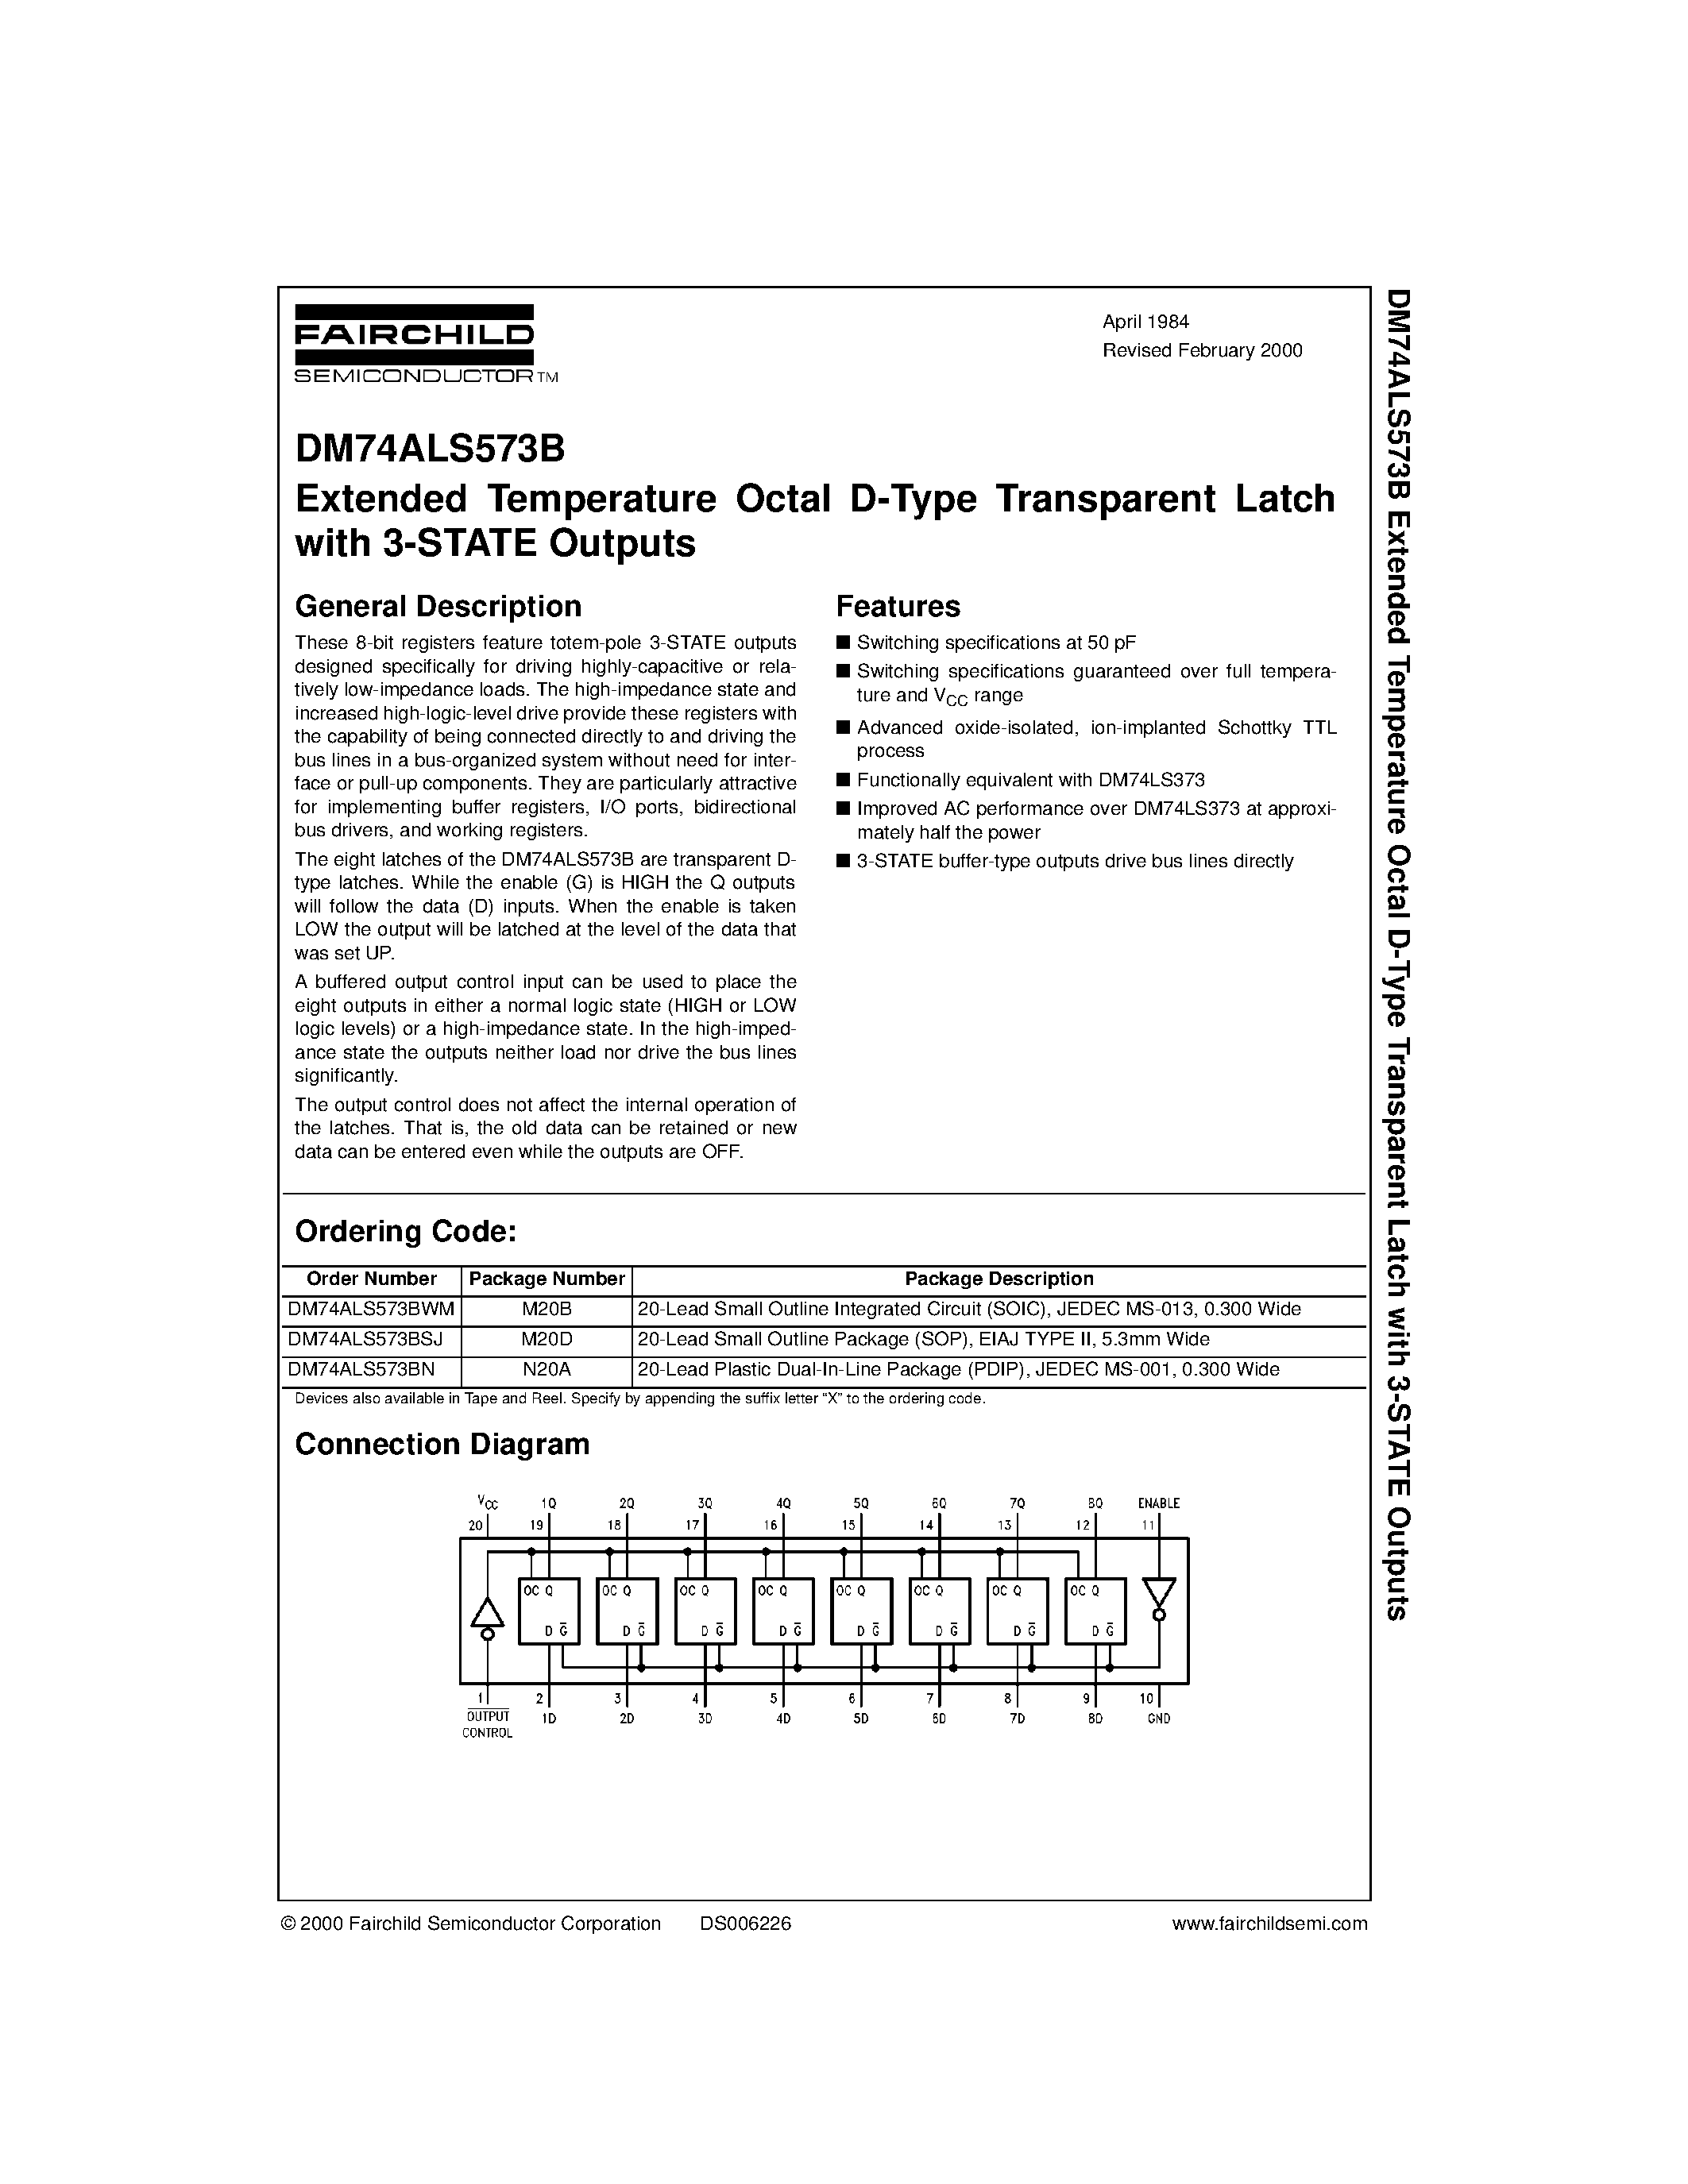 Даташит DM74ALS573BN - Extended Temperature Octal D-Type Transparent Latch страница 1